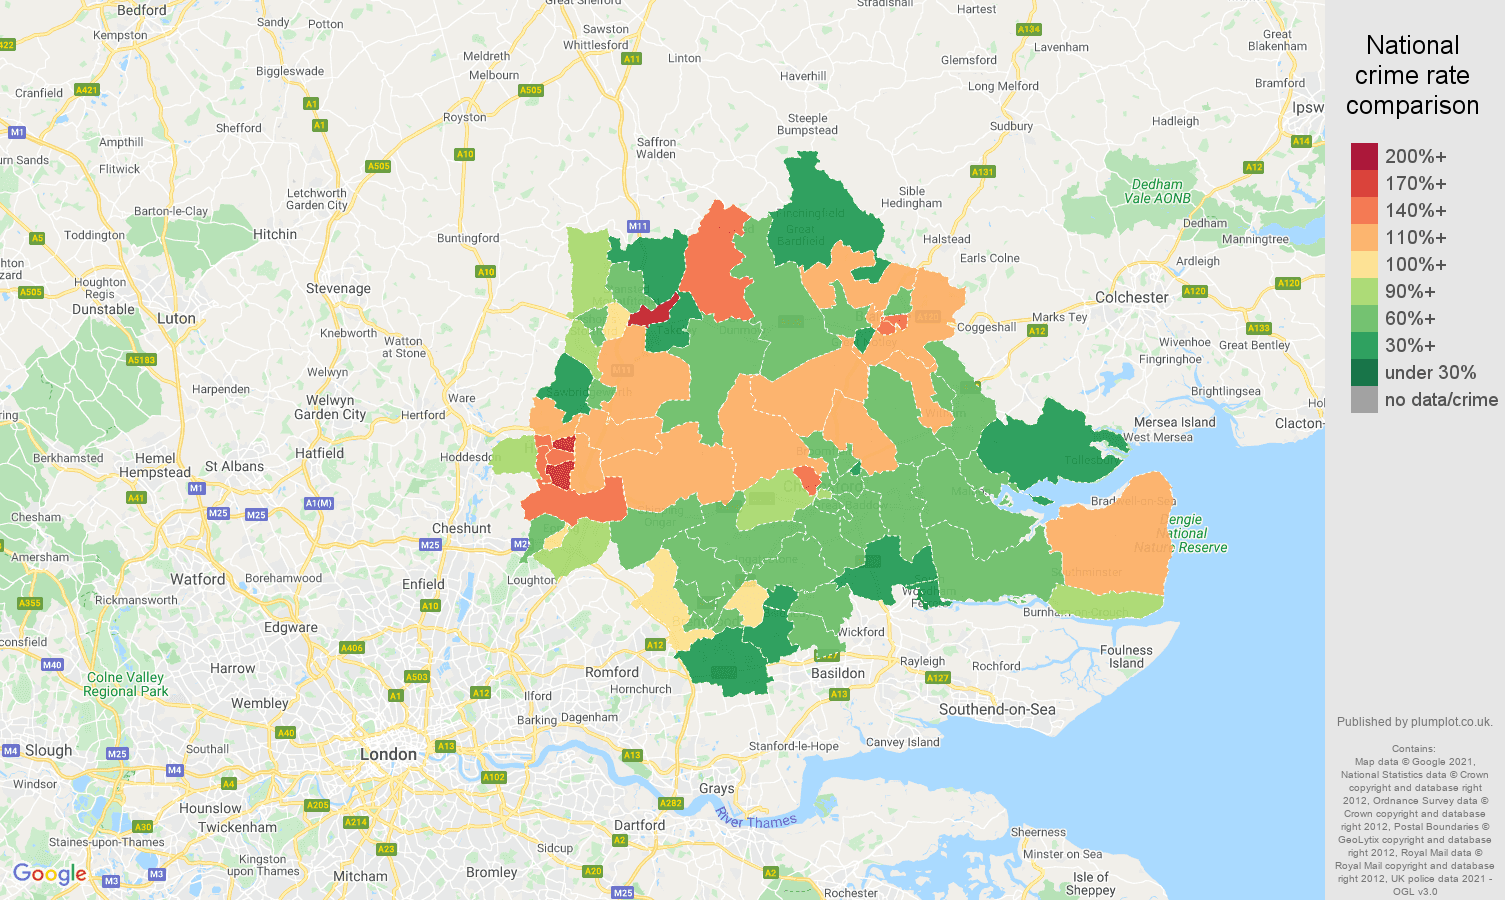 Chelmsford criminal damage and arson crime rate comparison map